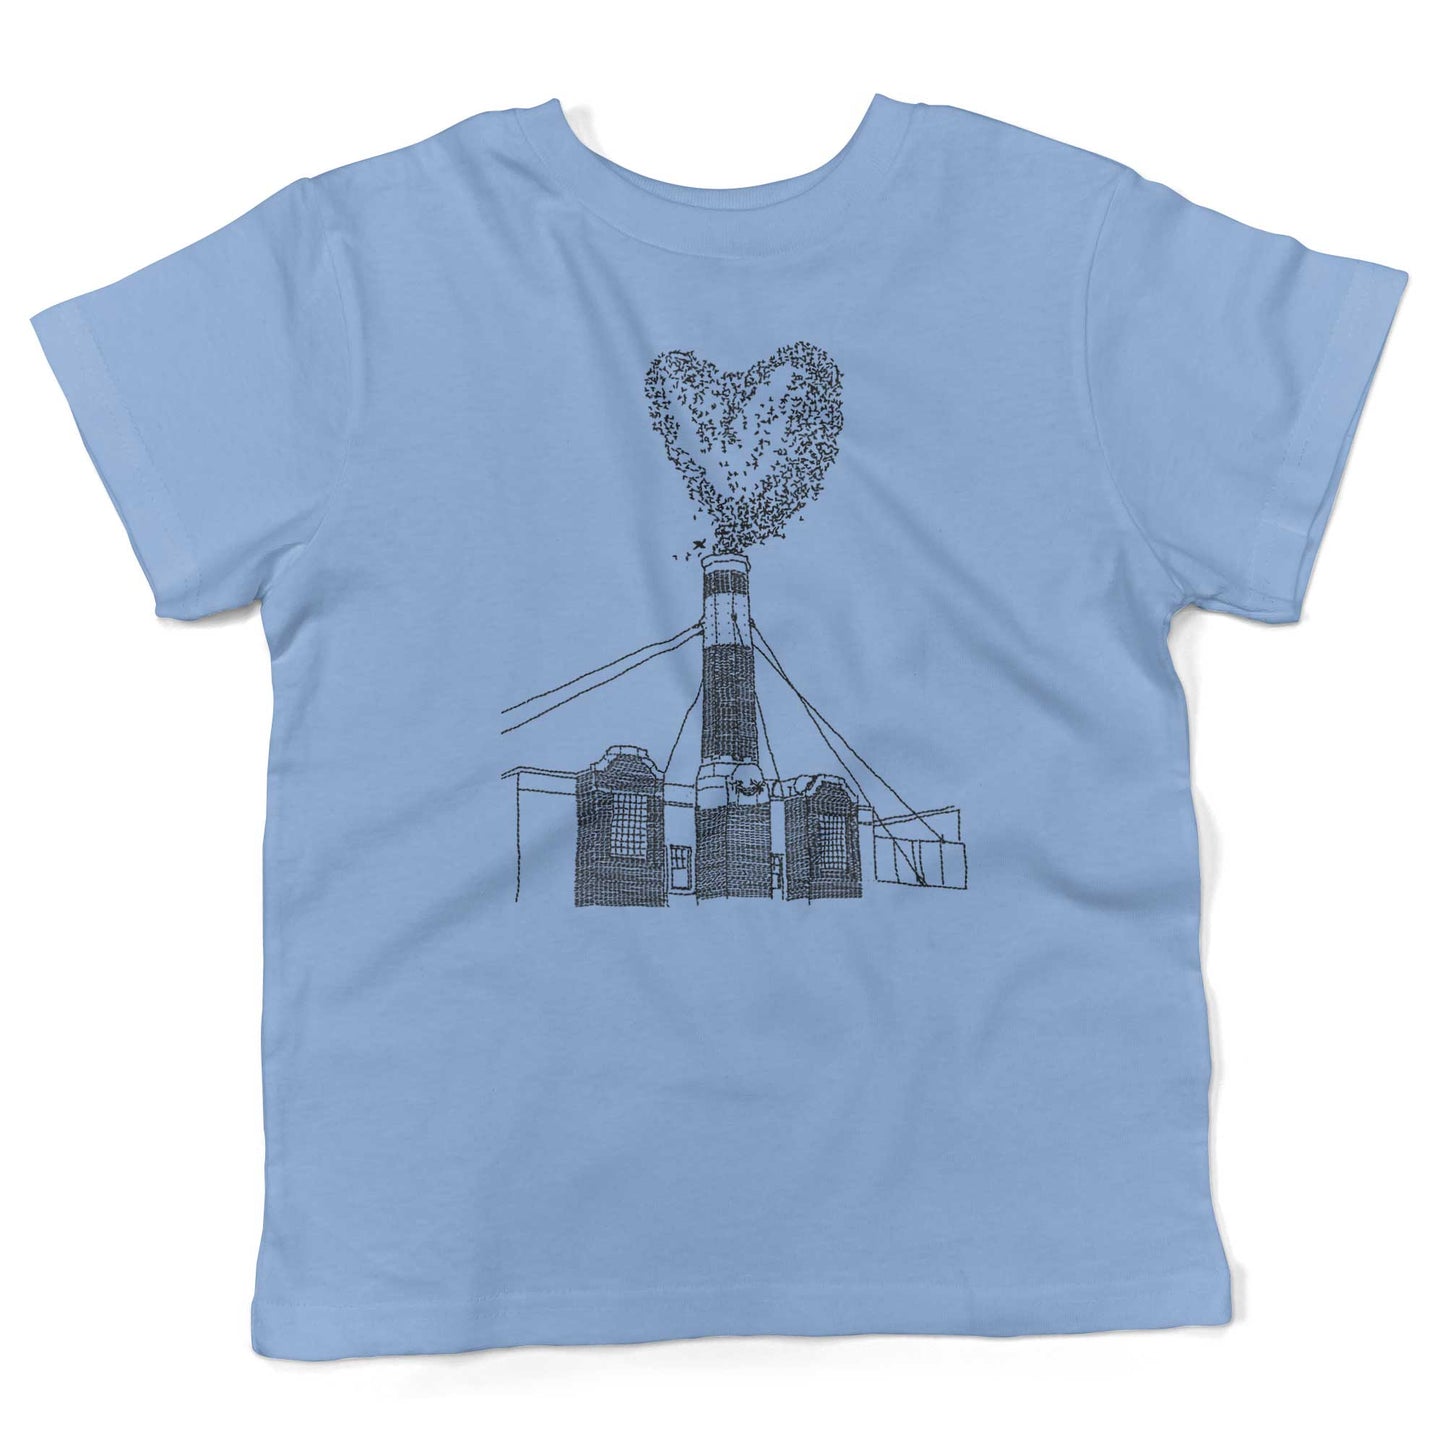 Chapman Swifts Toddler Shirt-Organic Baby Blue-2T